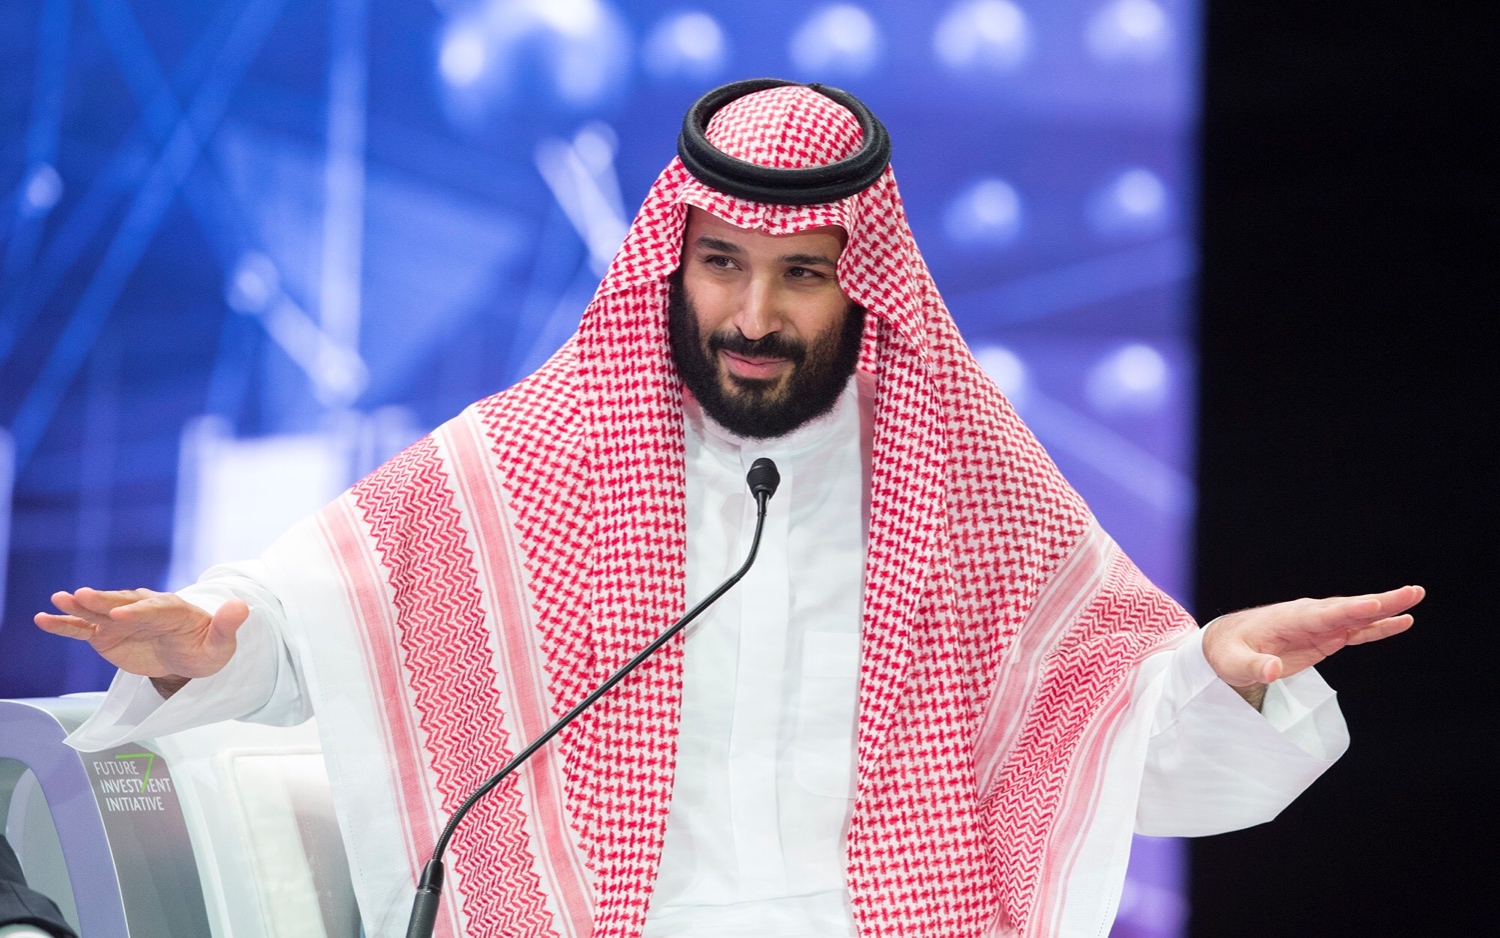 Mohammad bin Salman speaks during the Future Investment Initiative on Oct 24. Photographer: Bandar Algaloud/Saudi Kingdom Council/Anadolu Agency/Getty Images